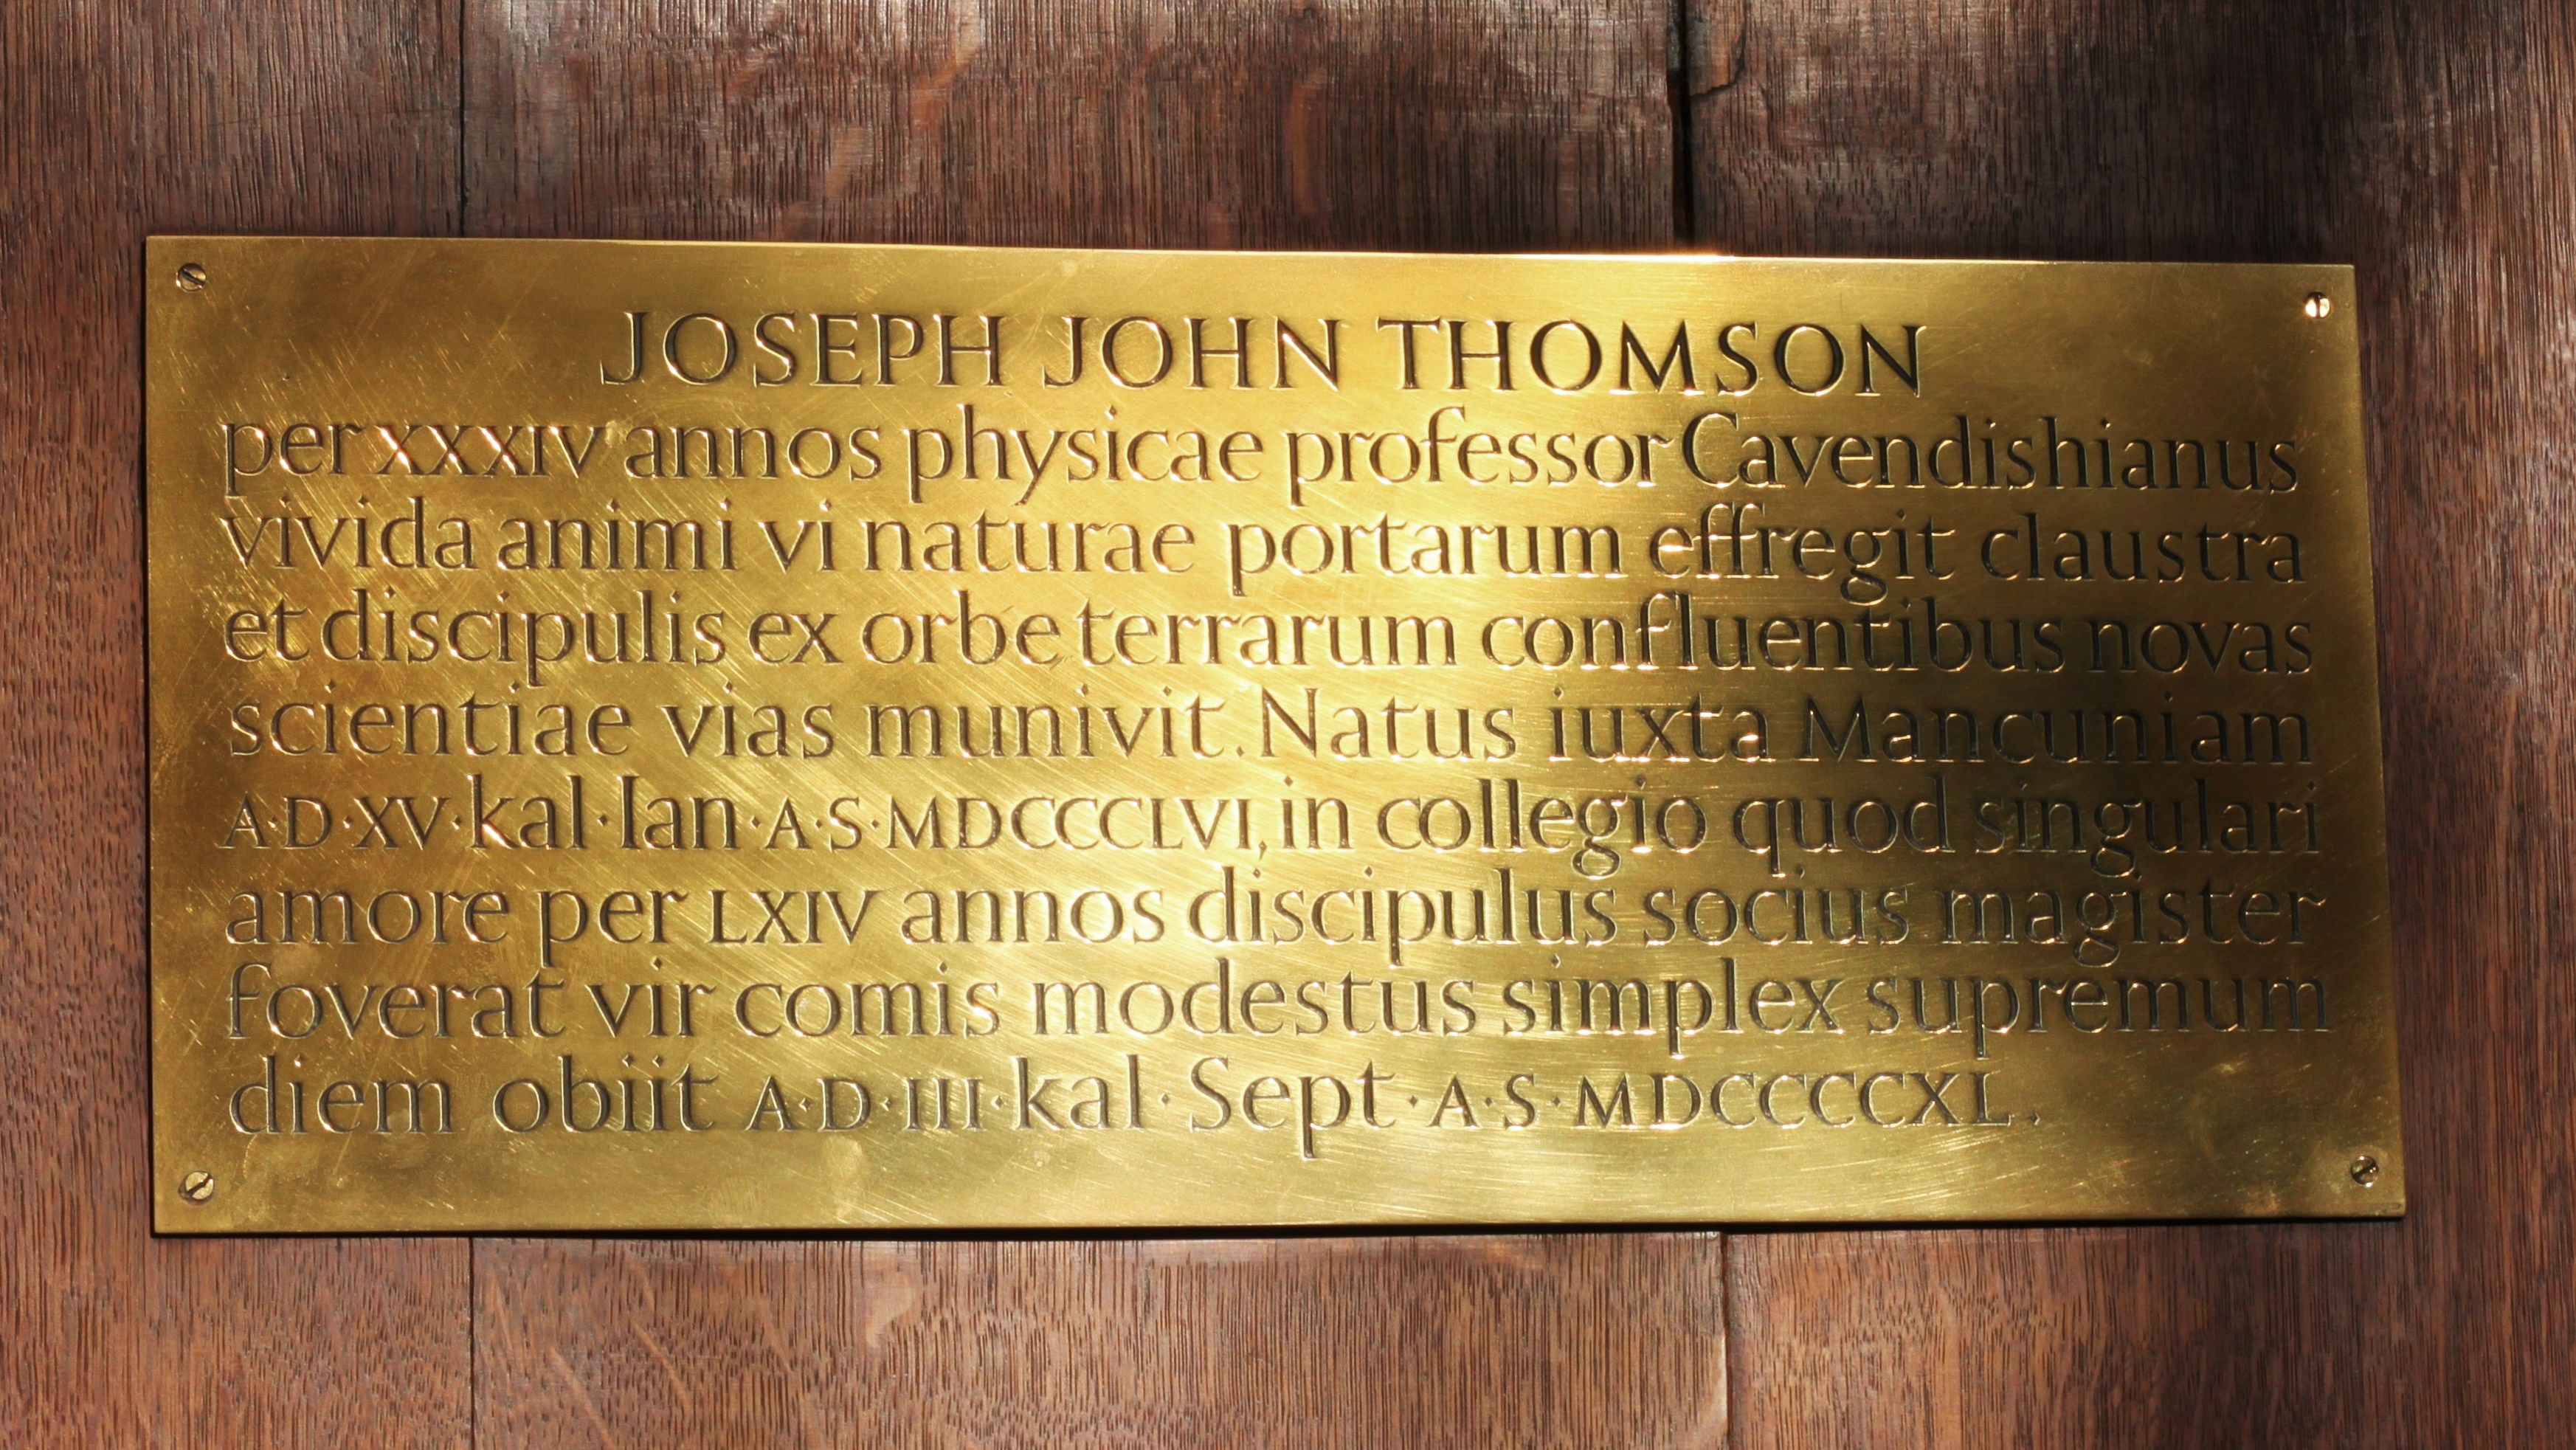 Joseph John Thomson - Rincón educativo